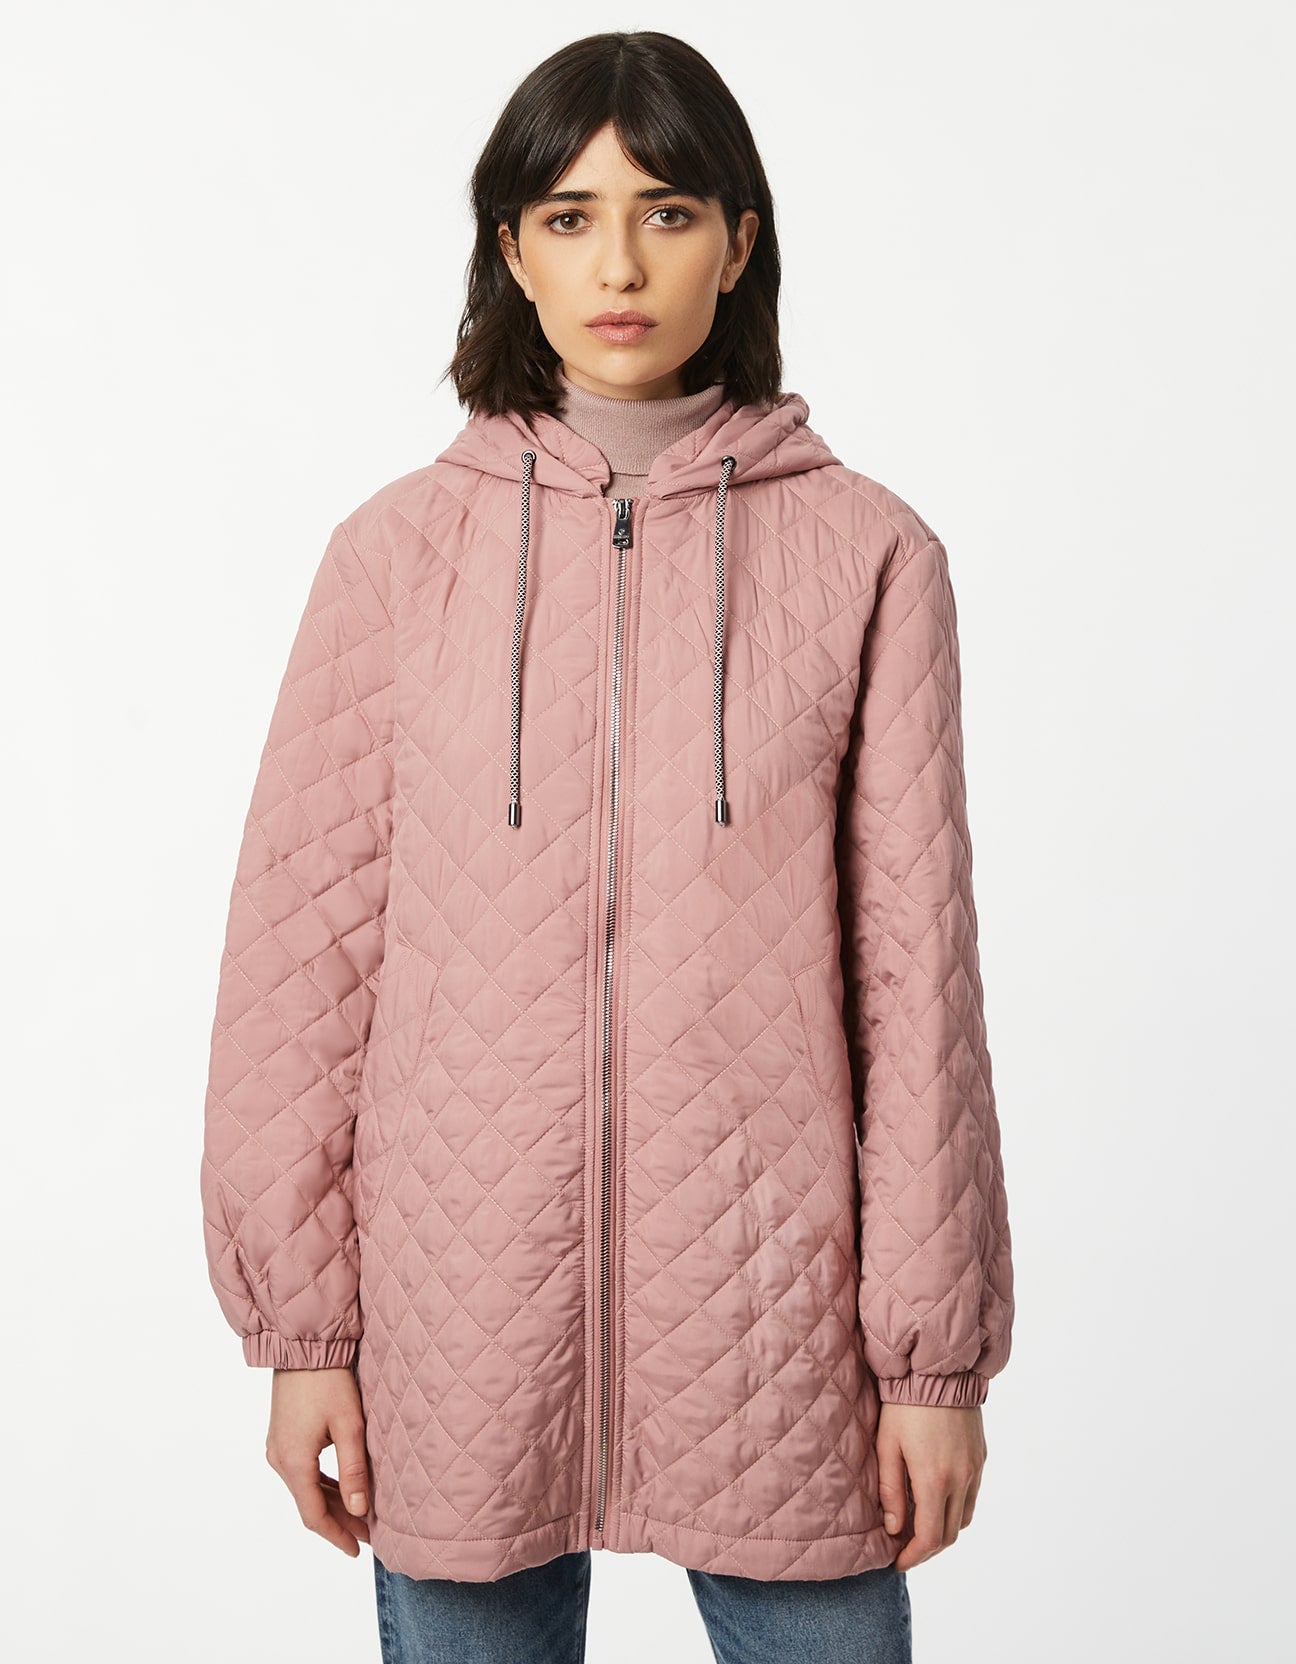 Lite Quilted Coat for Women - Putty Pink - Bernardo